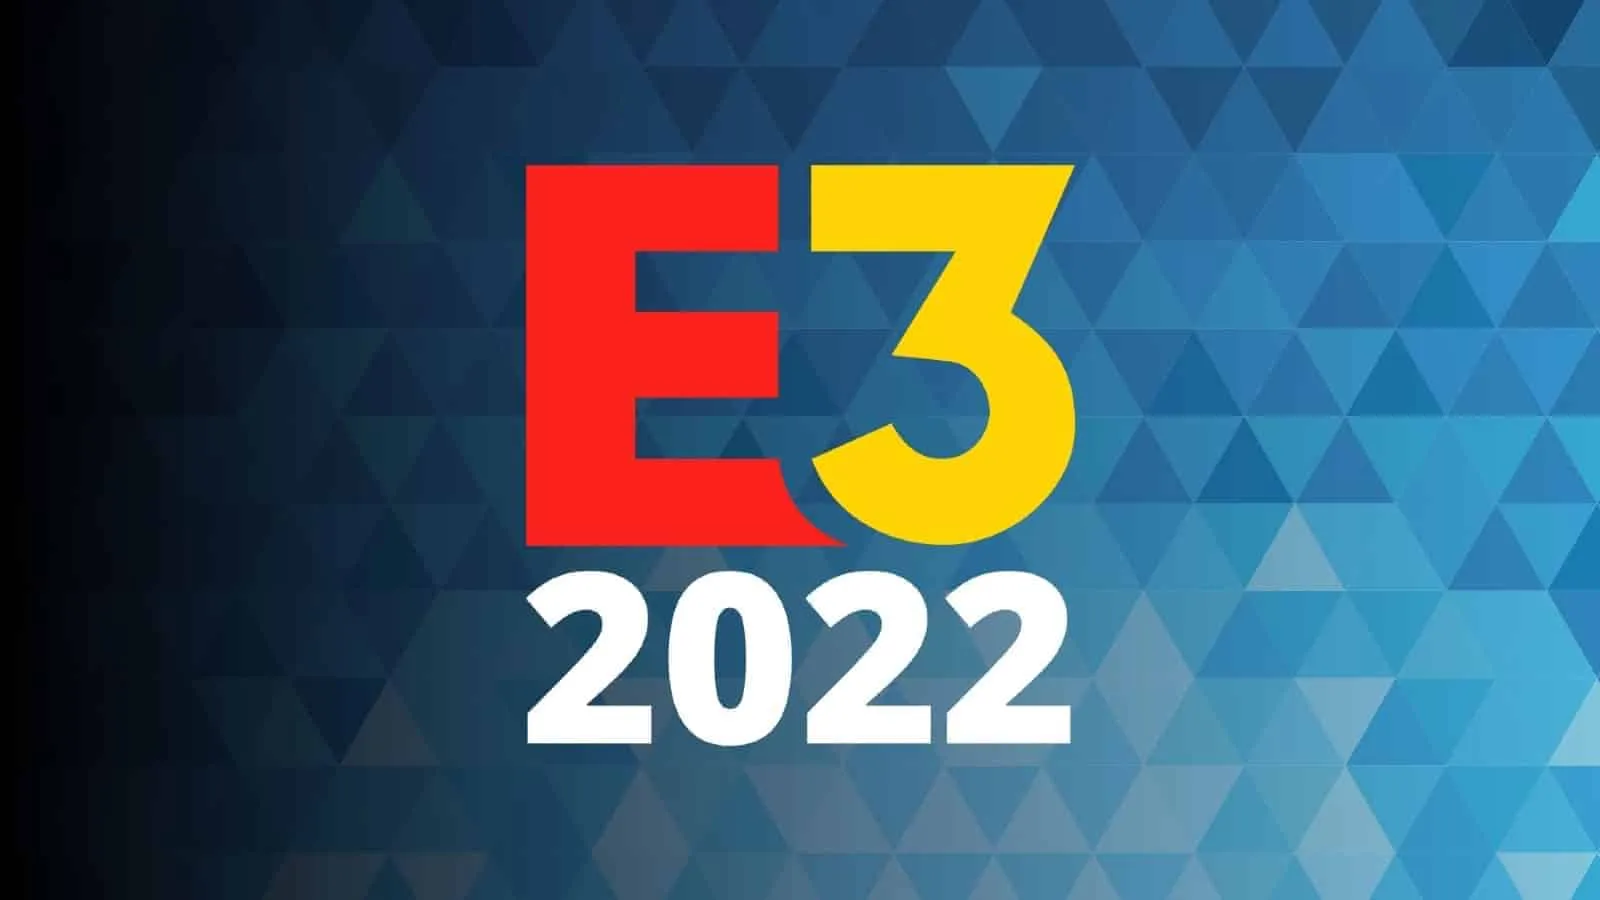 На E3 2022, не предусмотрено виртуальное мероприятие по физике